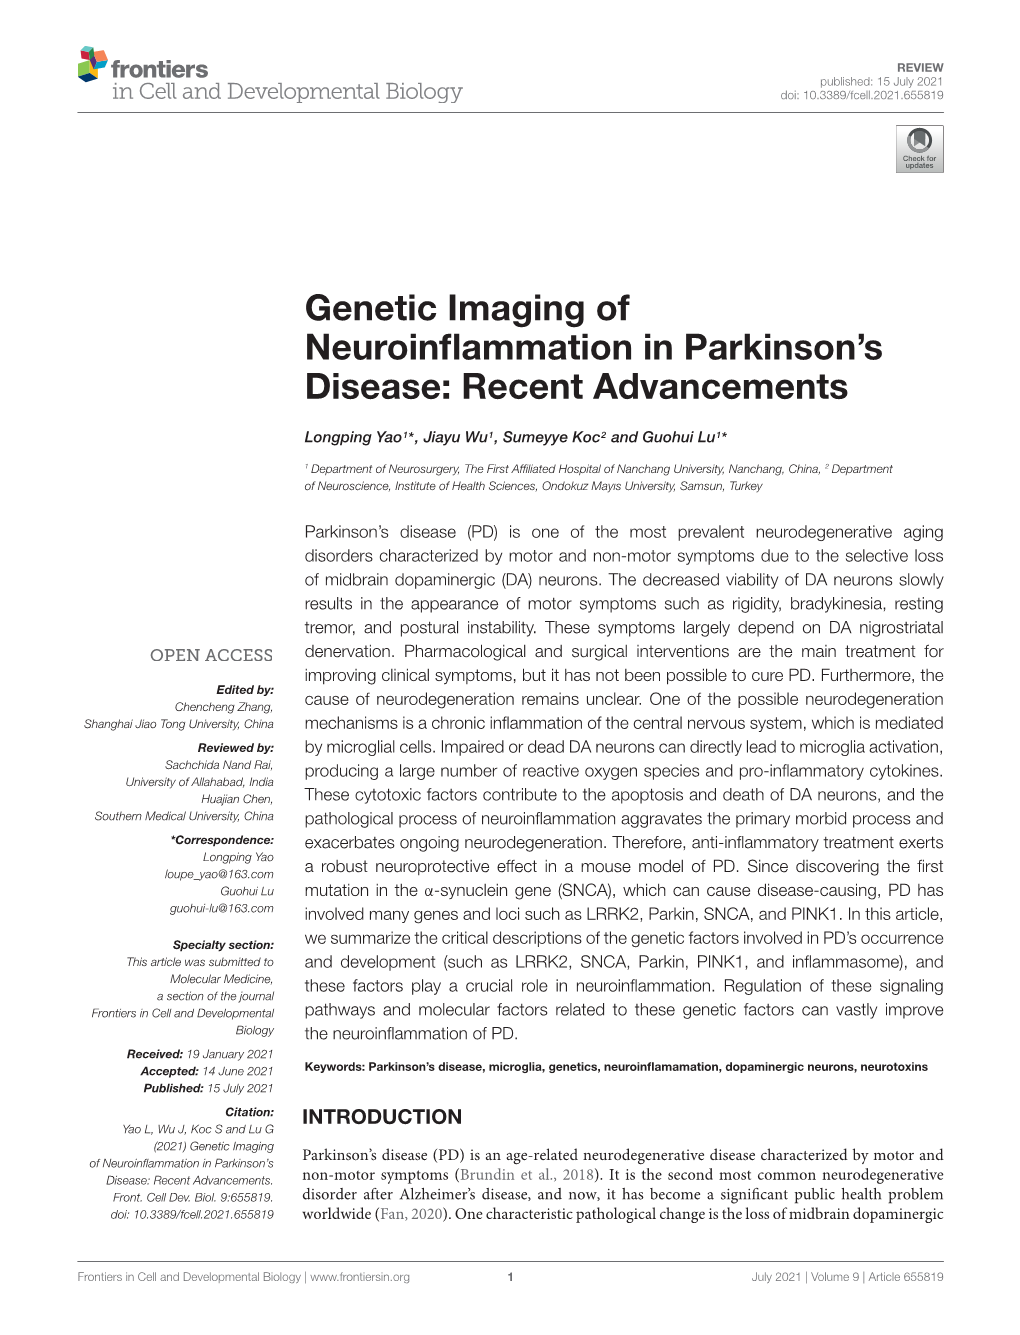 Genetic Imaging of Neuroinflammation in Parkinson's Disease